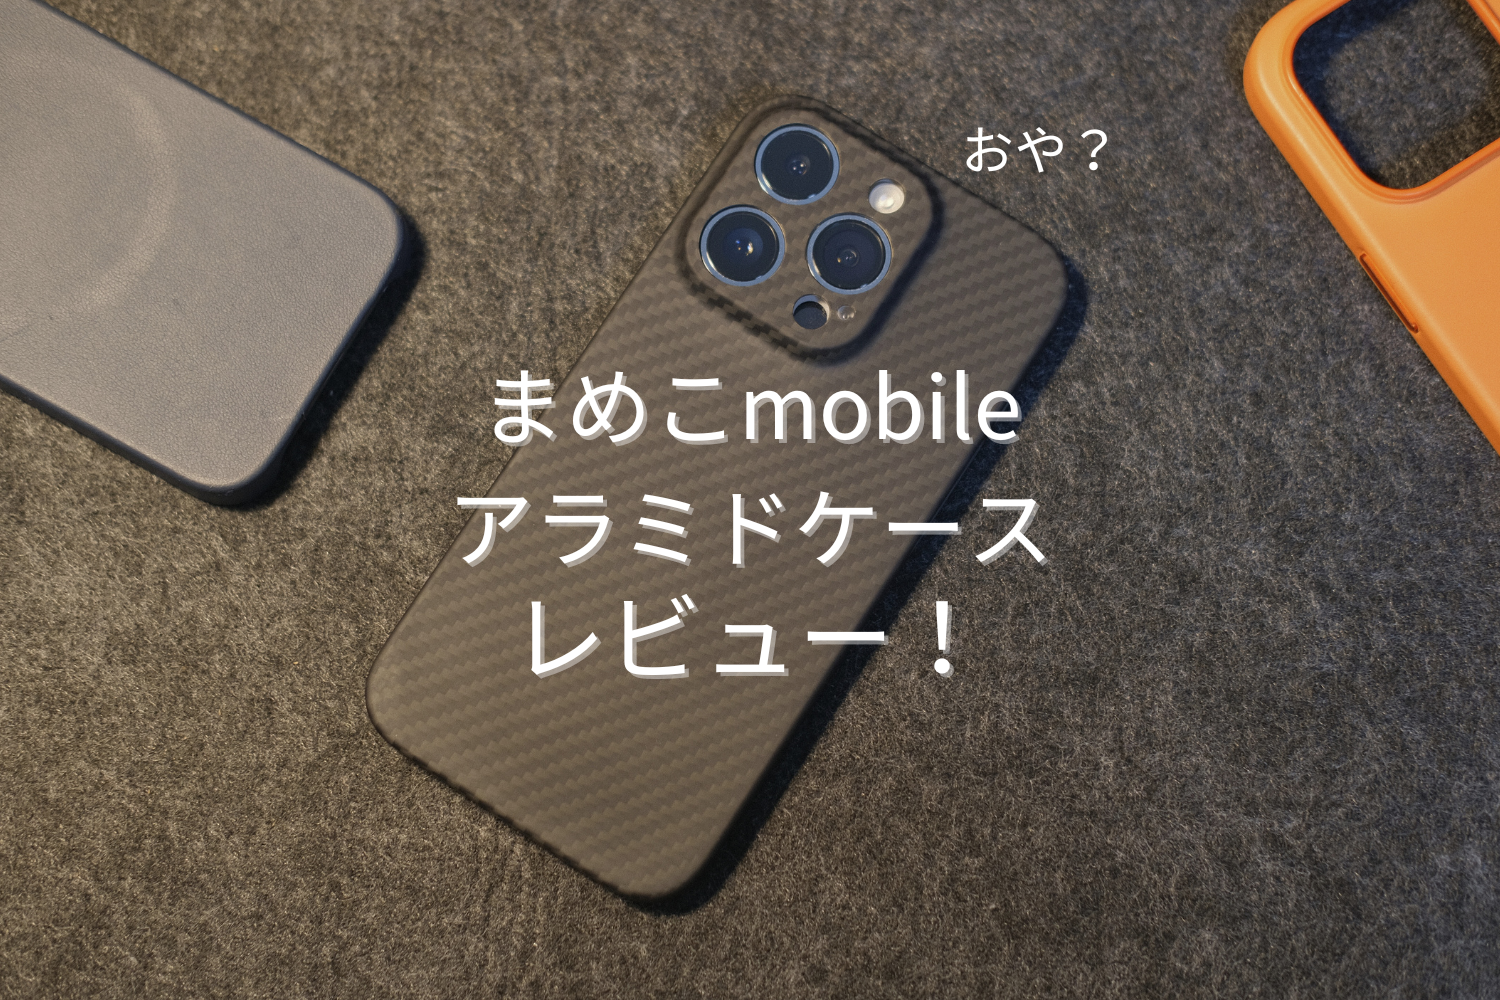 mameko-mobile-sumahocase